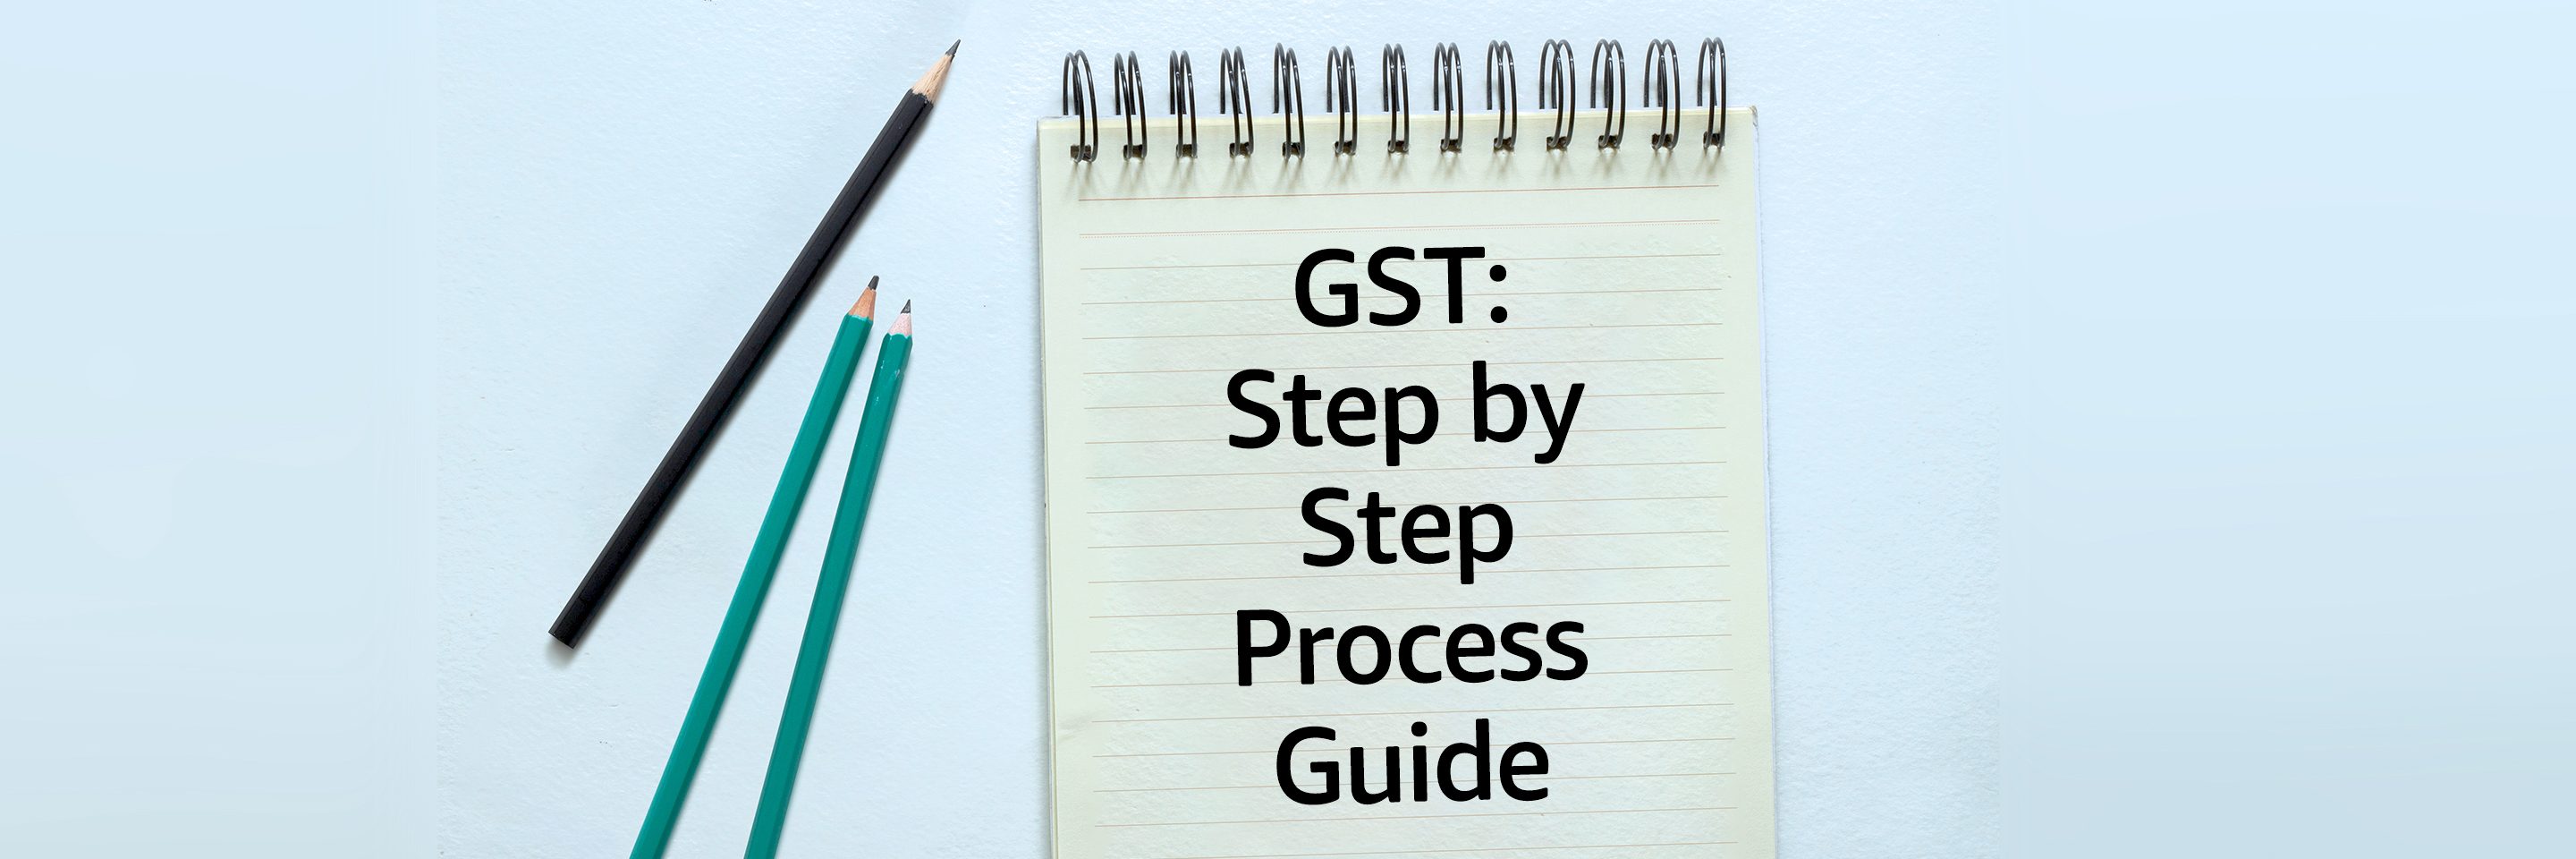 GST Registration Process